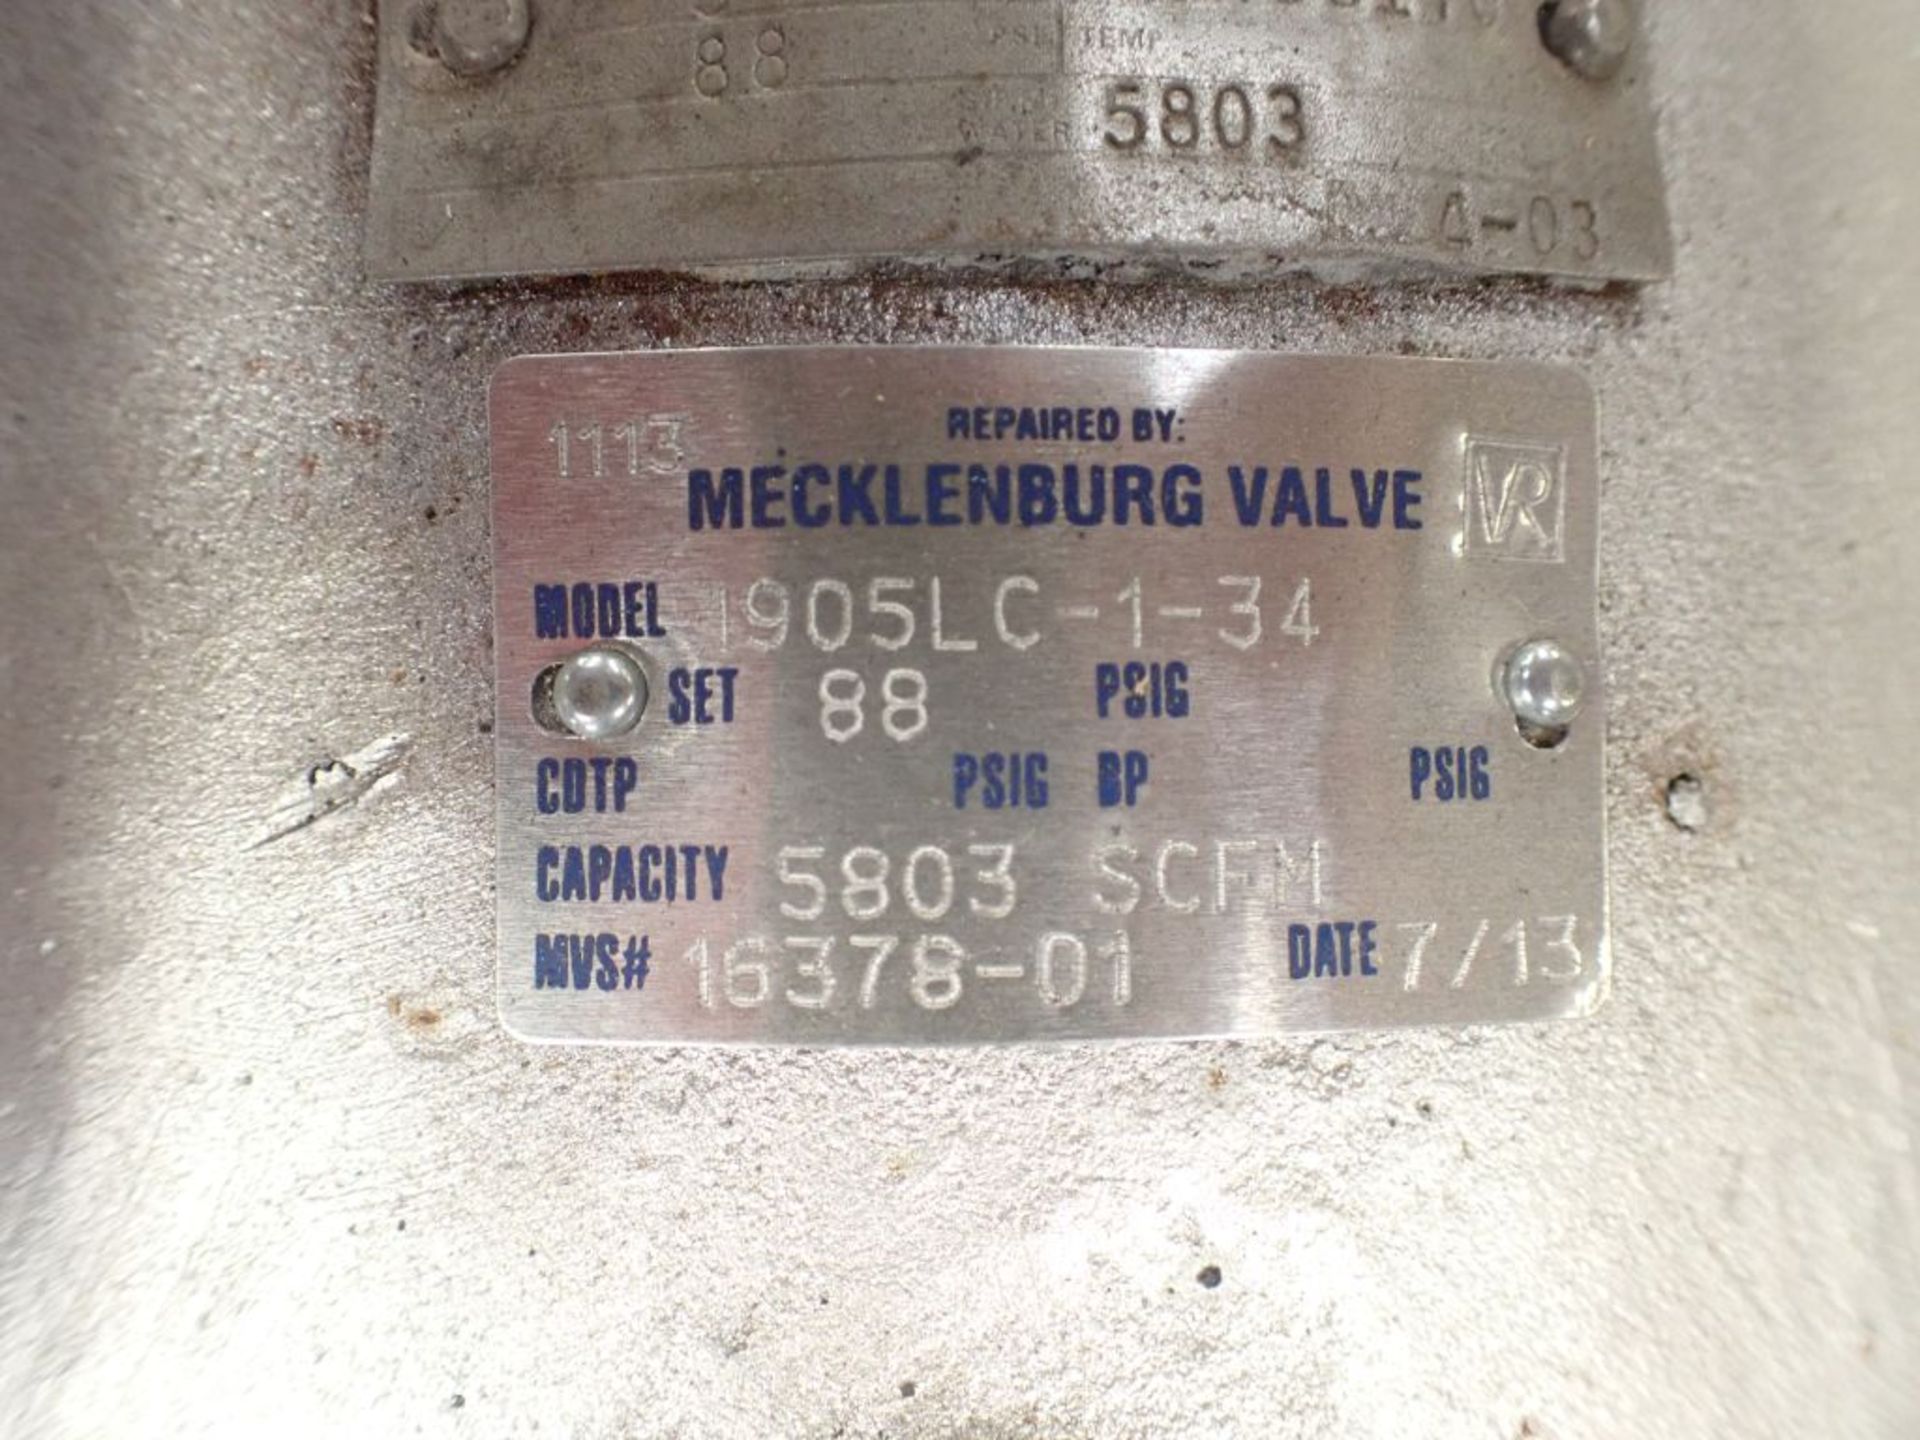 UV Valve - Model No. 1905LC-1-34; Serial No. TN361 70; Tag: 215687 - Image 4 of 7